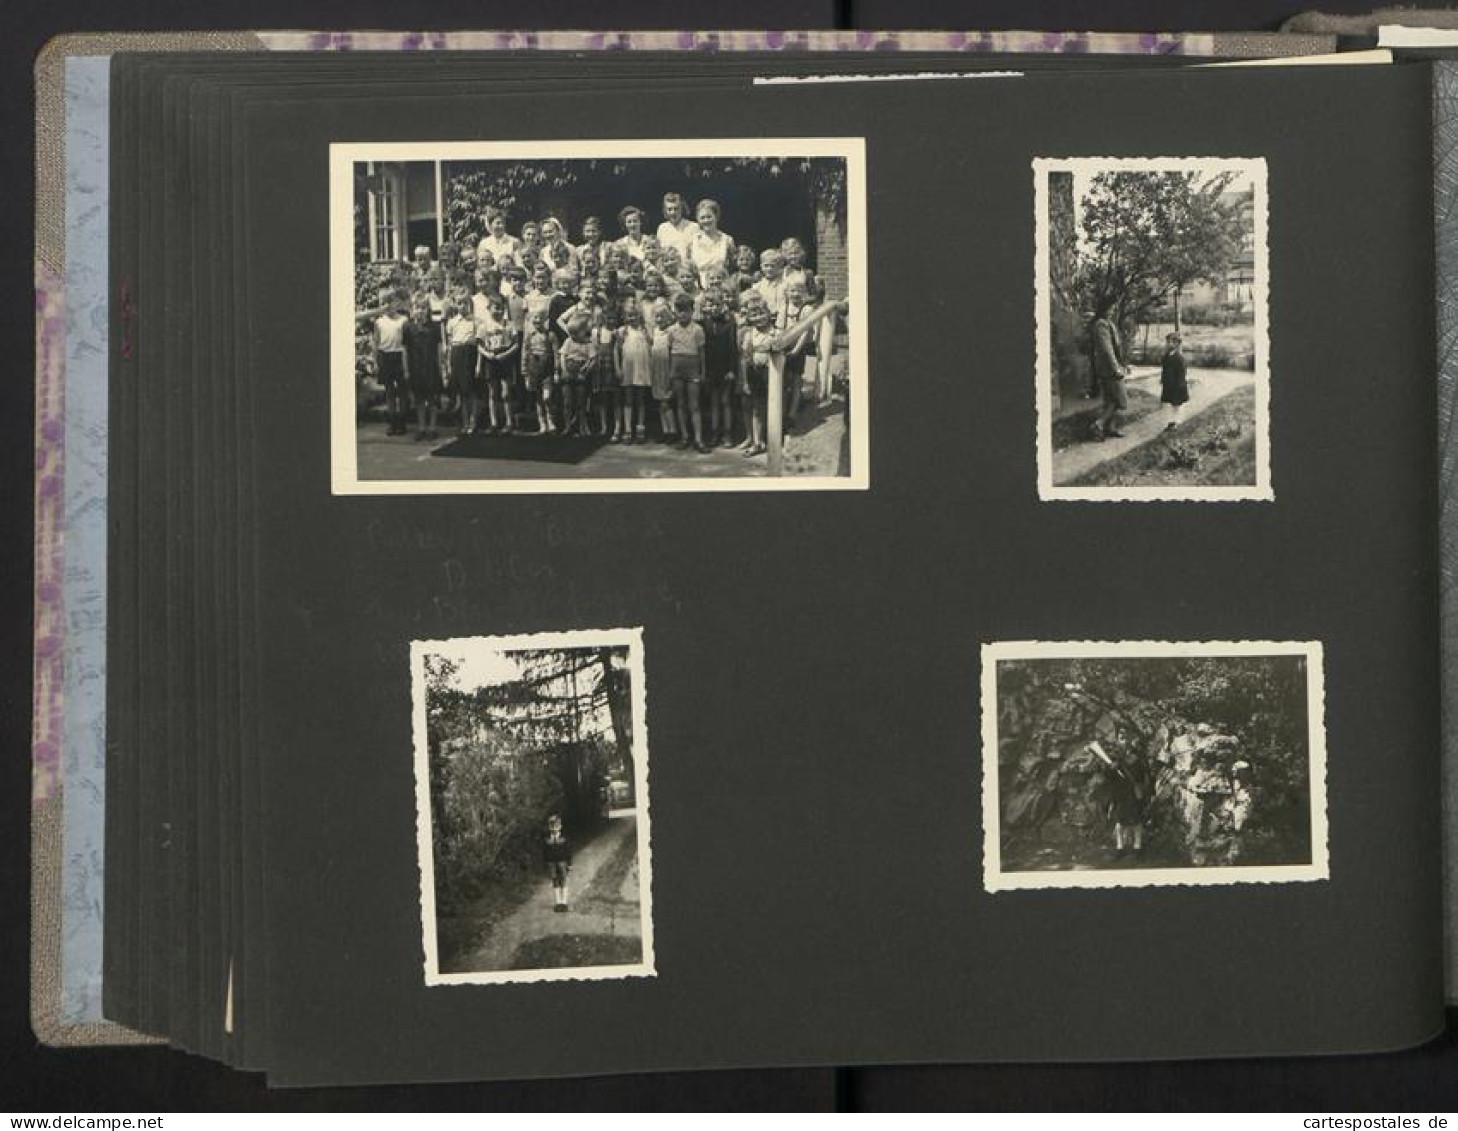 Fotoalbum mit 200 Fotografien, Mutterglück, Familie Bosse (1942-1958), Kinderfotos, Kinderwagen, Soldat in Uniform 